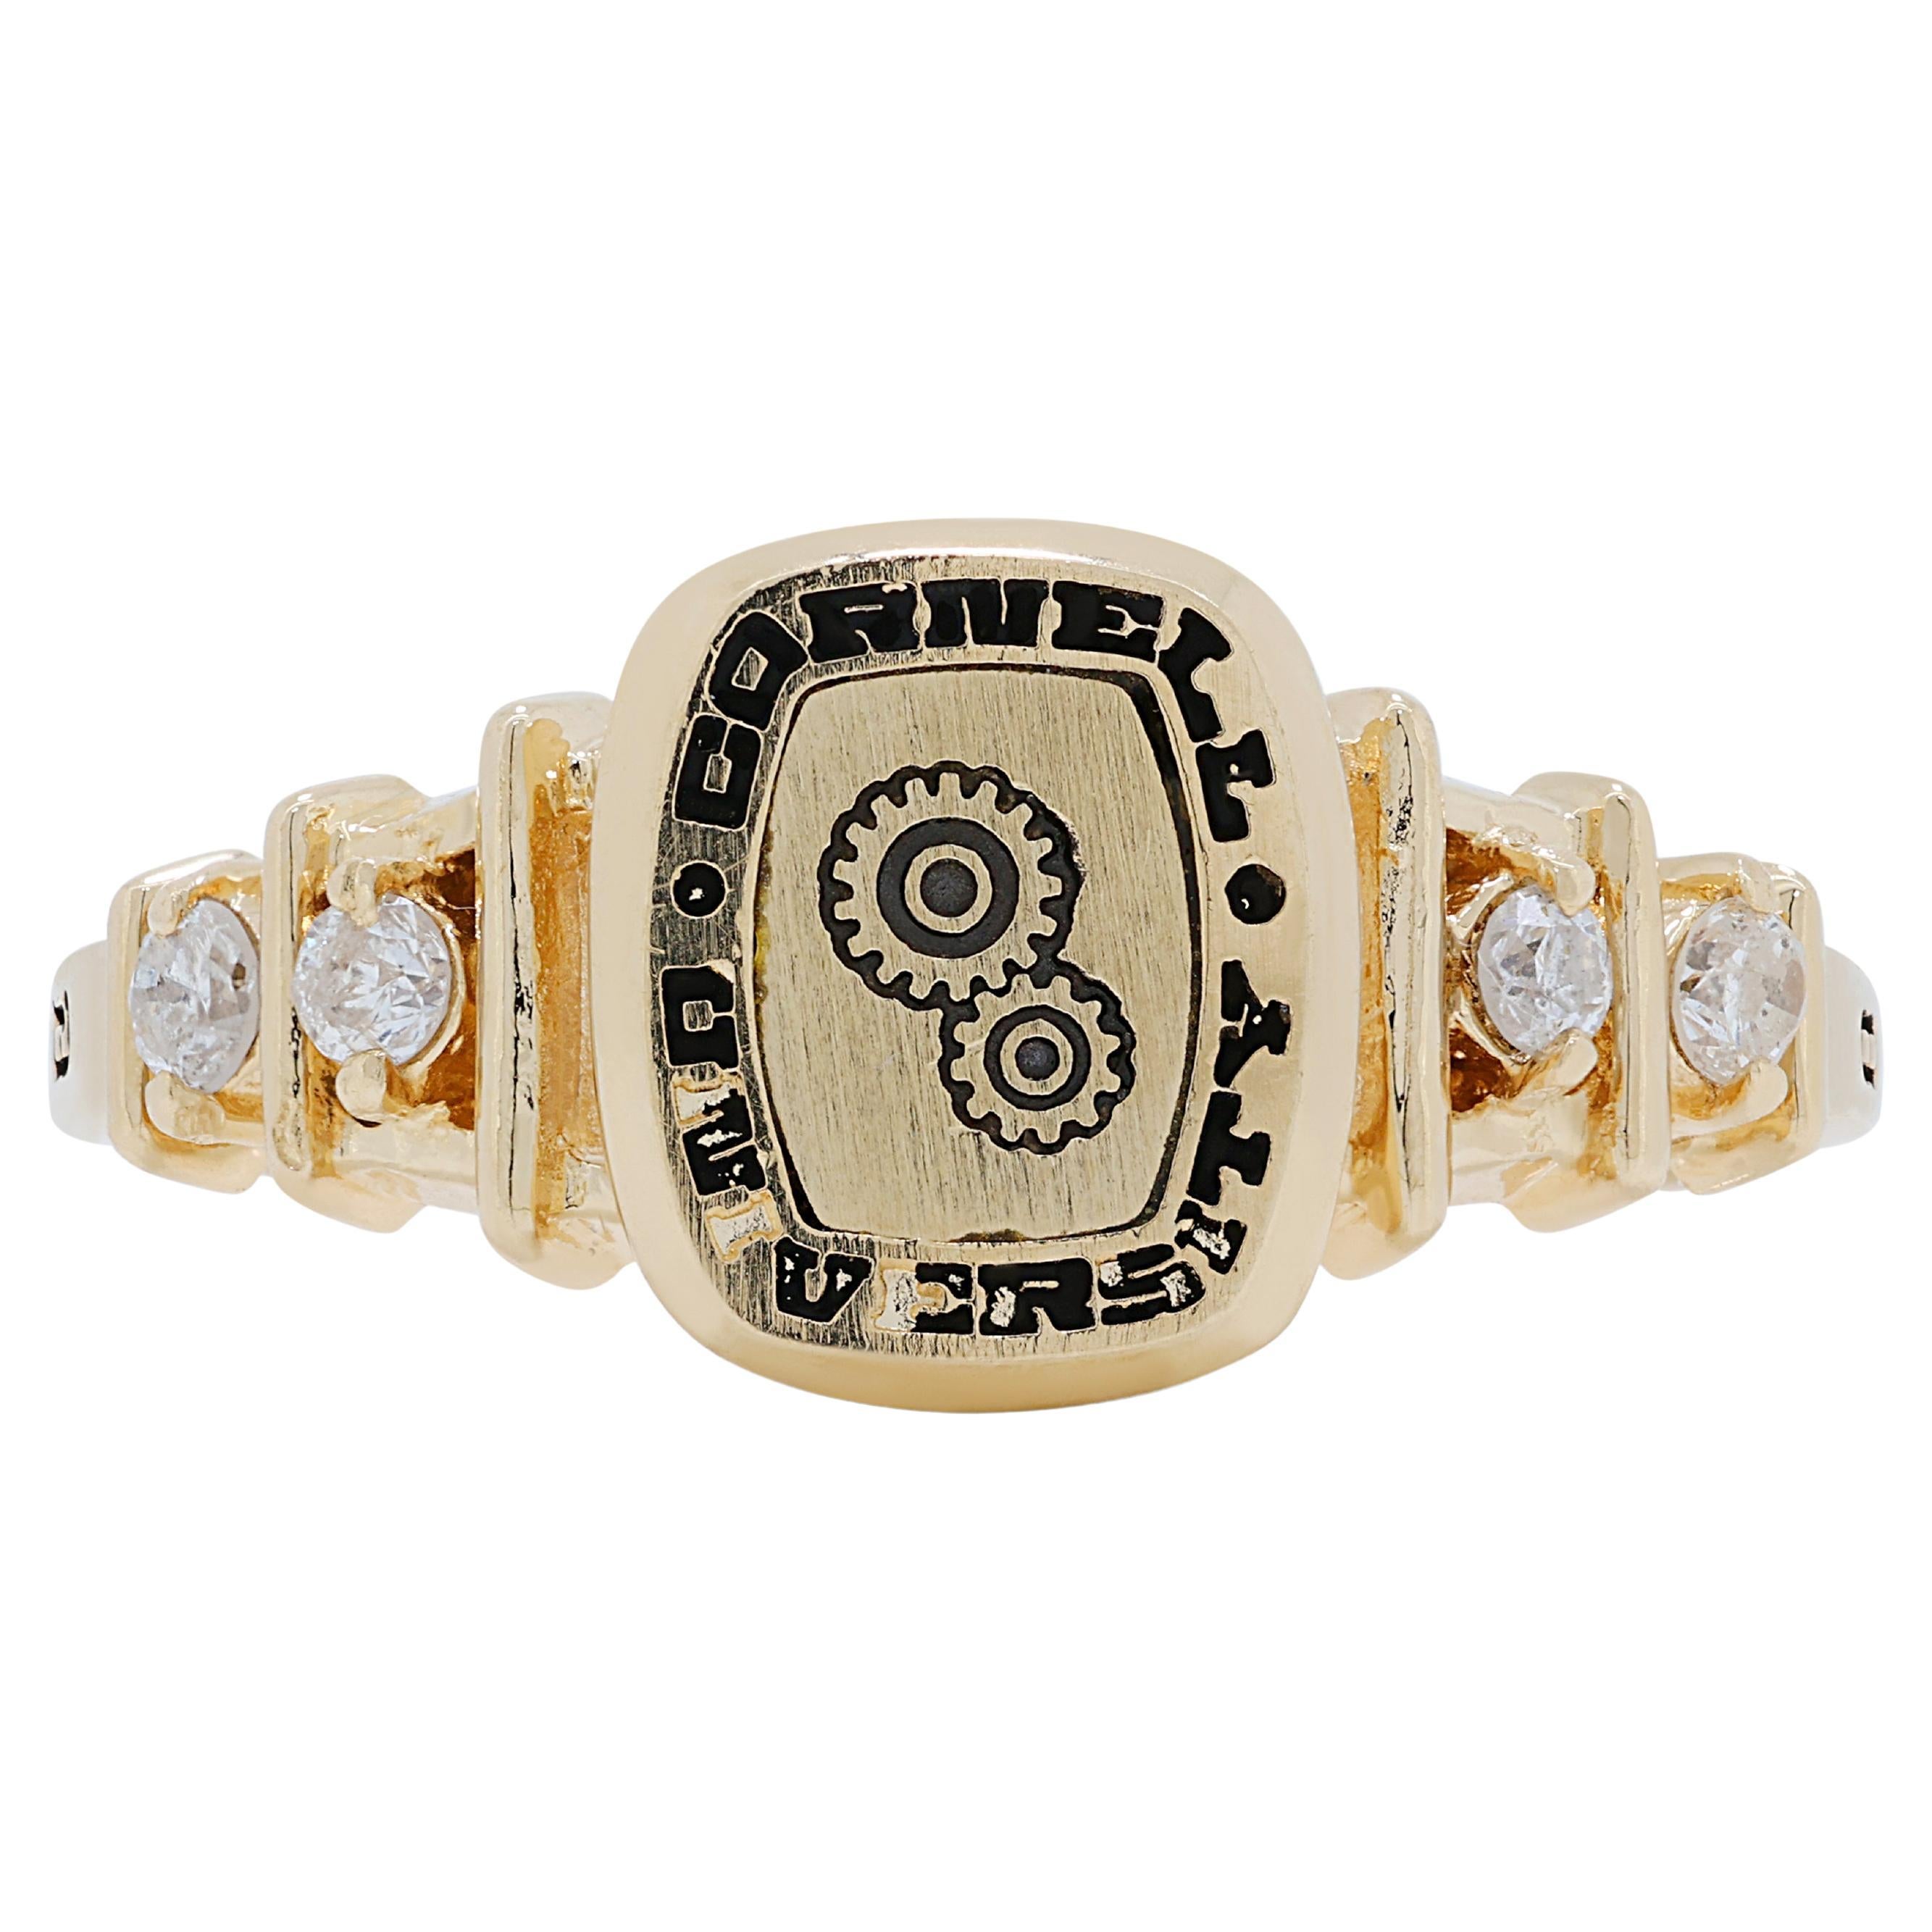 Stunning 0.08ct Diamond Pave Ring in 14K Yellow Gold